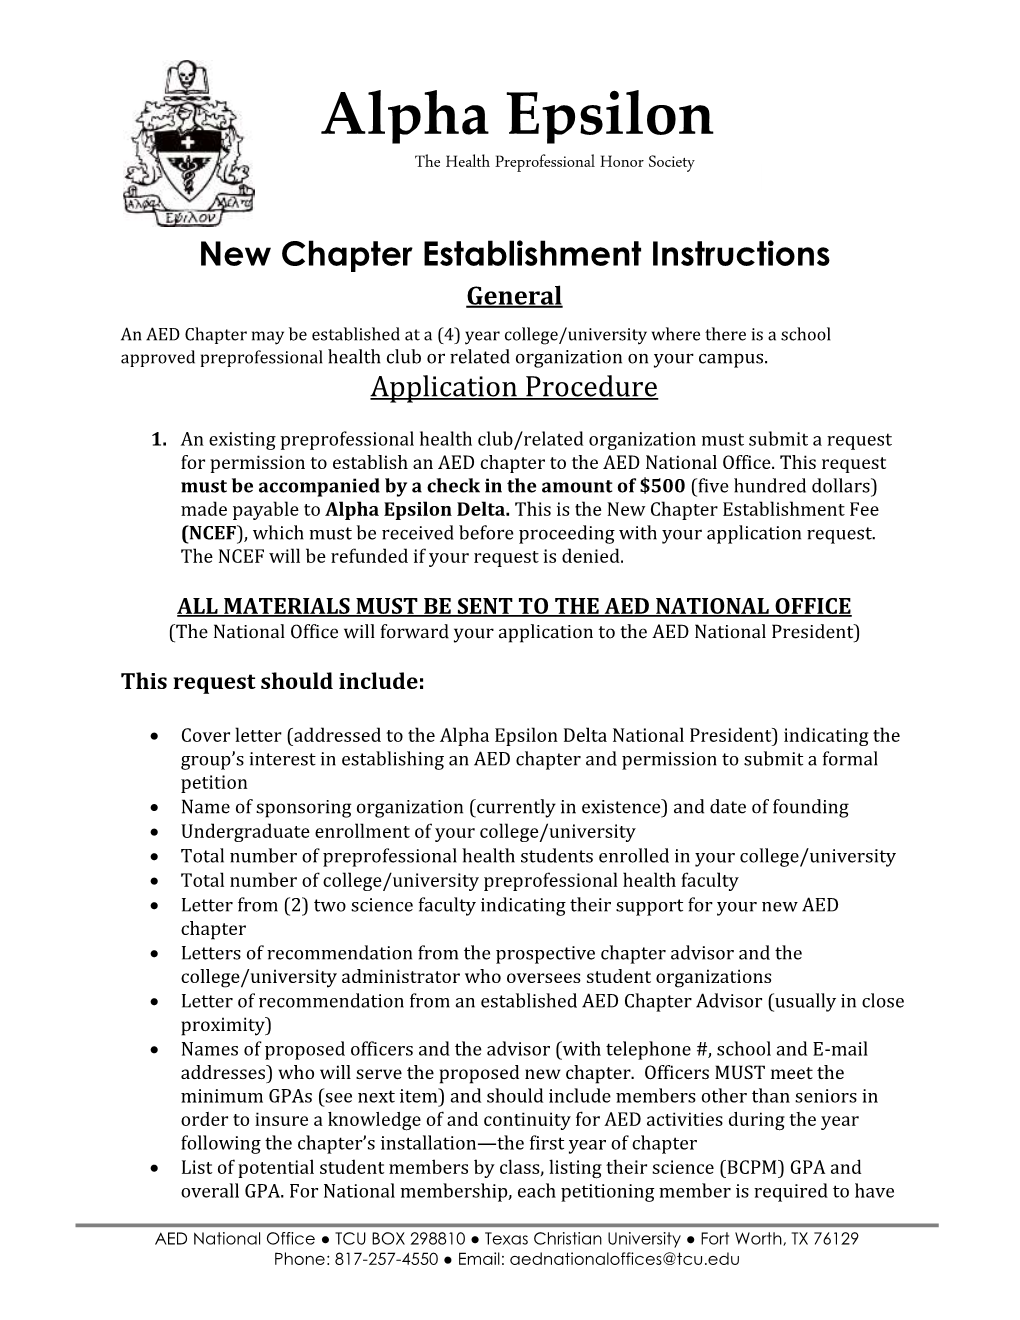 New Chapter Establishment Instructions General